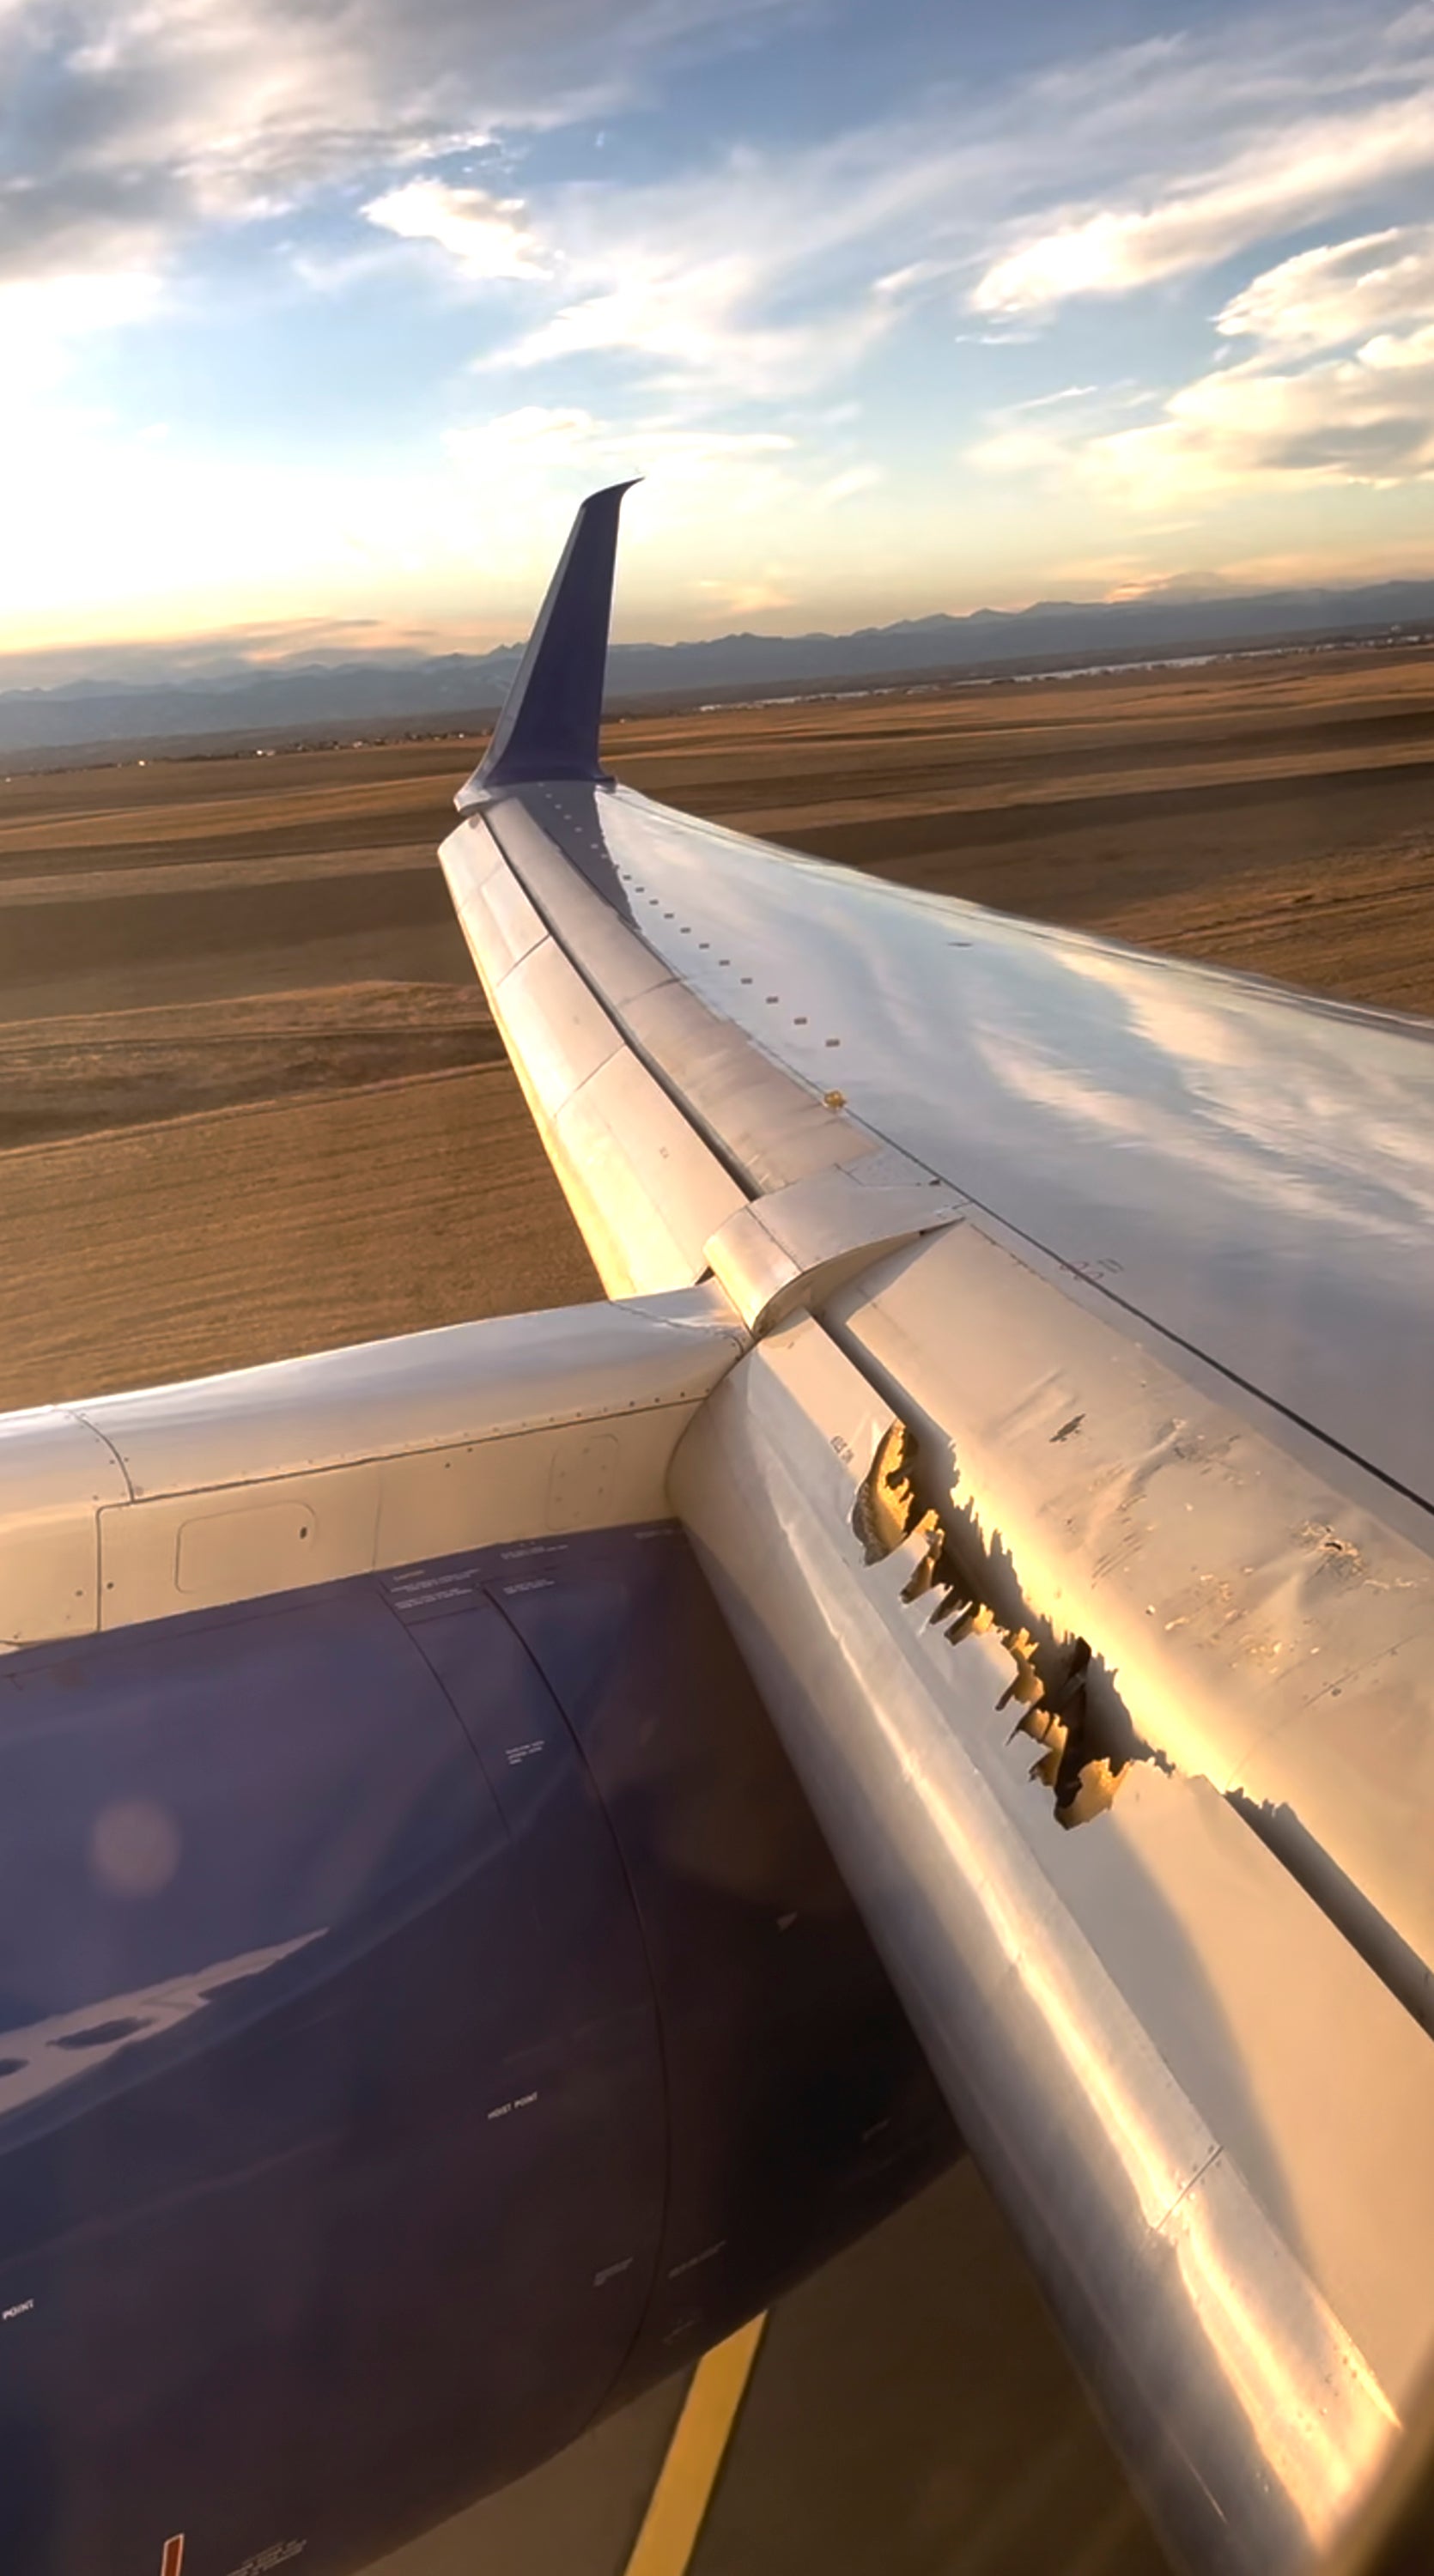 The plane was diverted safely to Denver